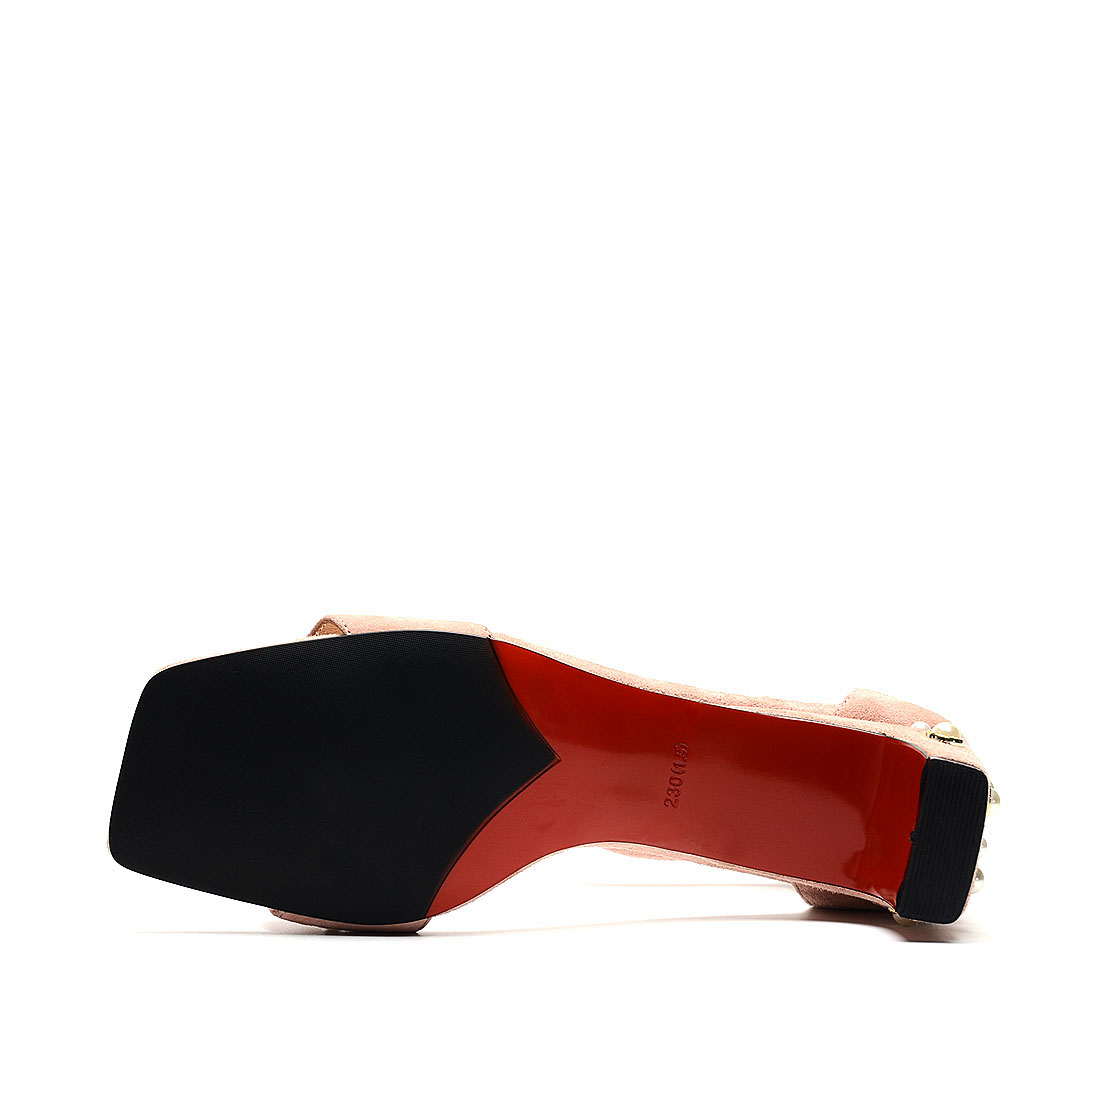 [RedLoafer]欧美风圆珠羊猄凉鞋(尺码标准)
编号：A3872L1A76